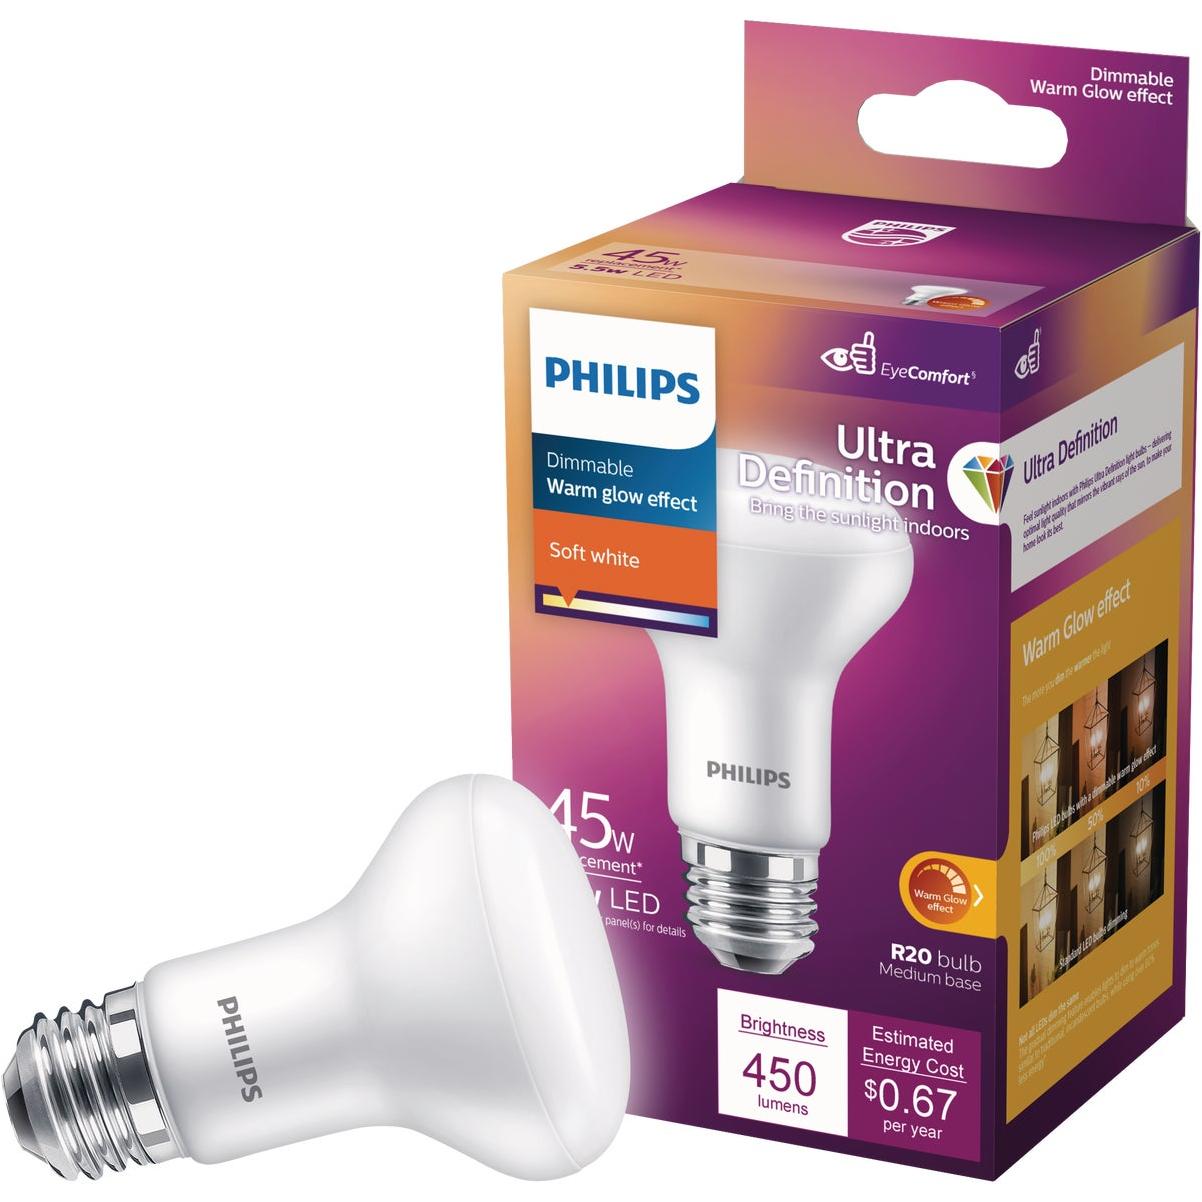 Yoghurt Transcend eftermiddag Philips 45W Equivalent Soft White R20 Medium Dimmable LED Floodlight Light  Bulb | Elitsac, Inc.